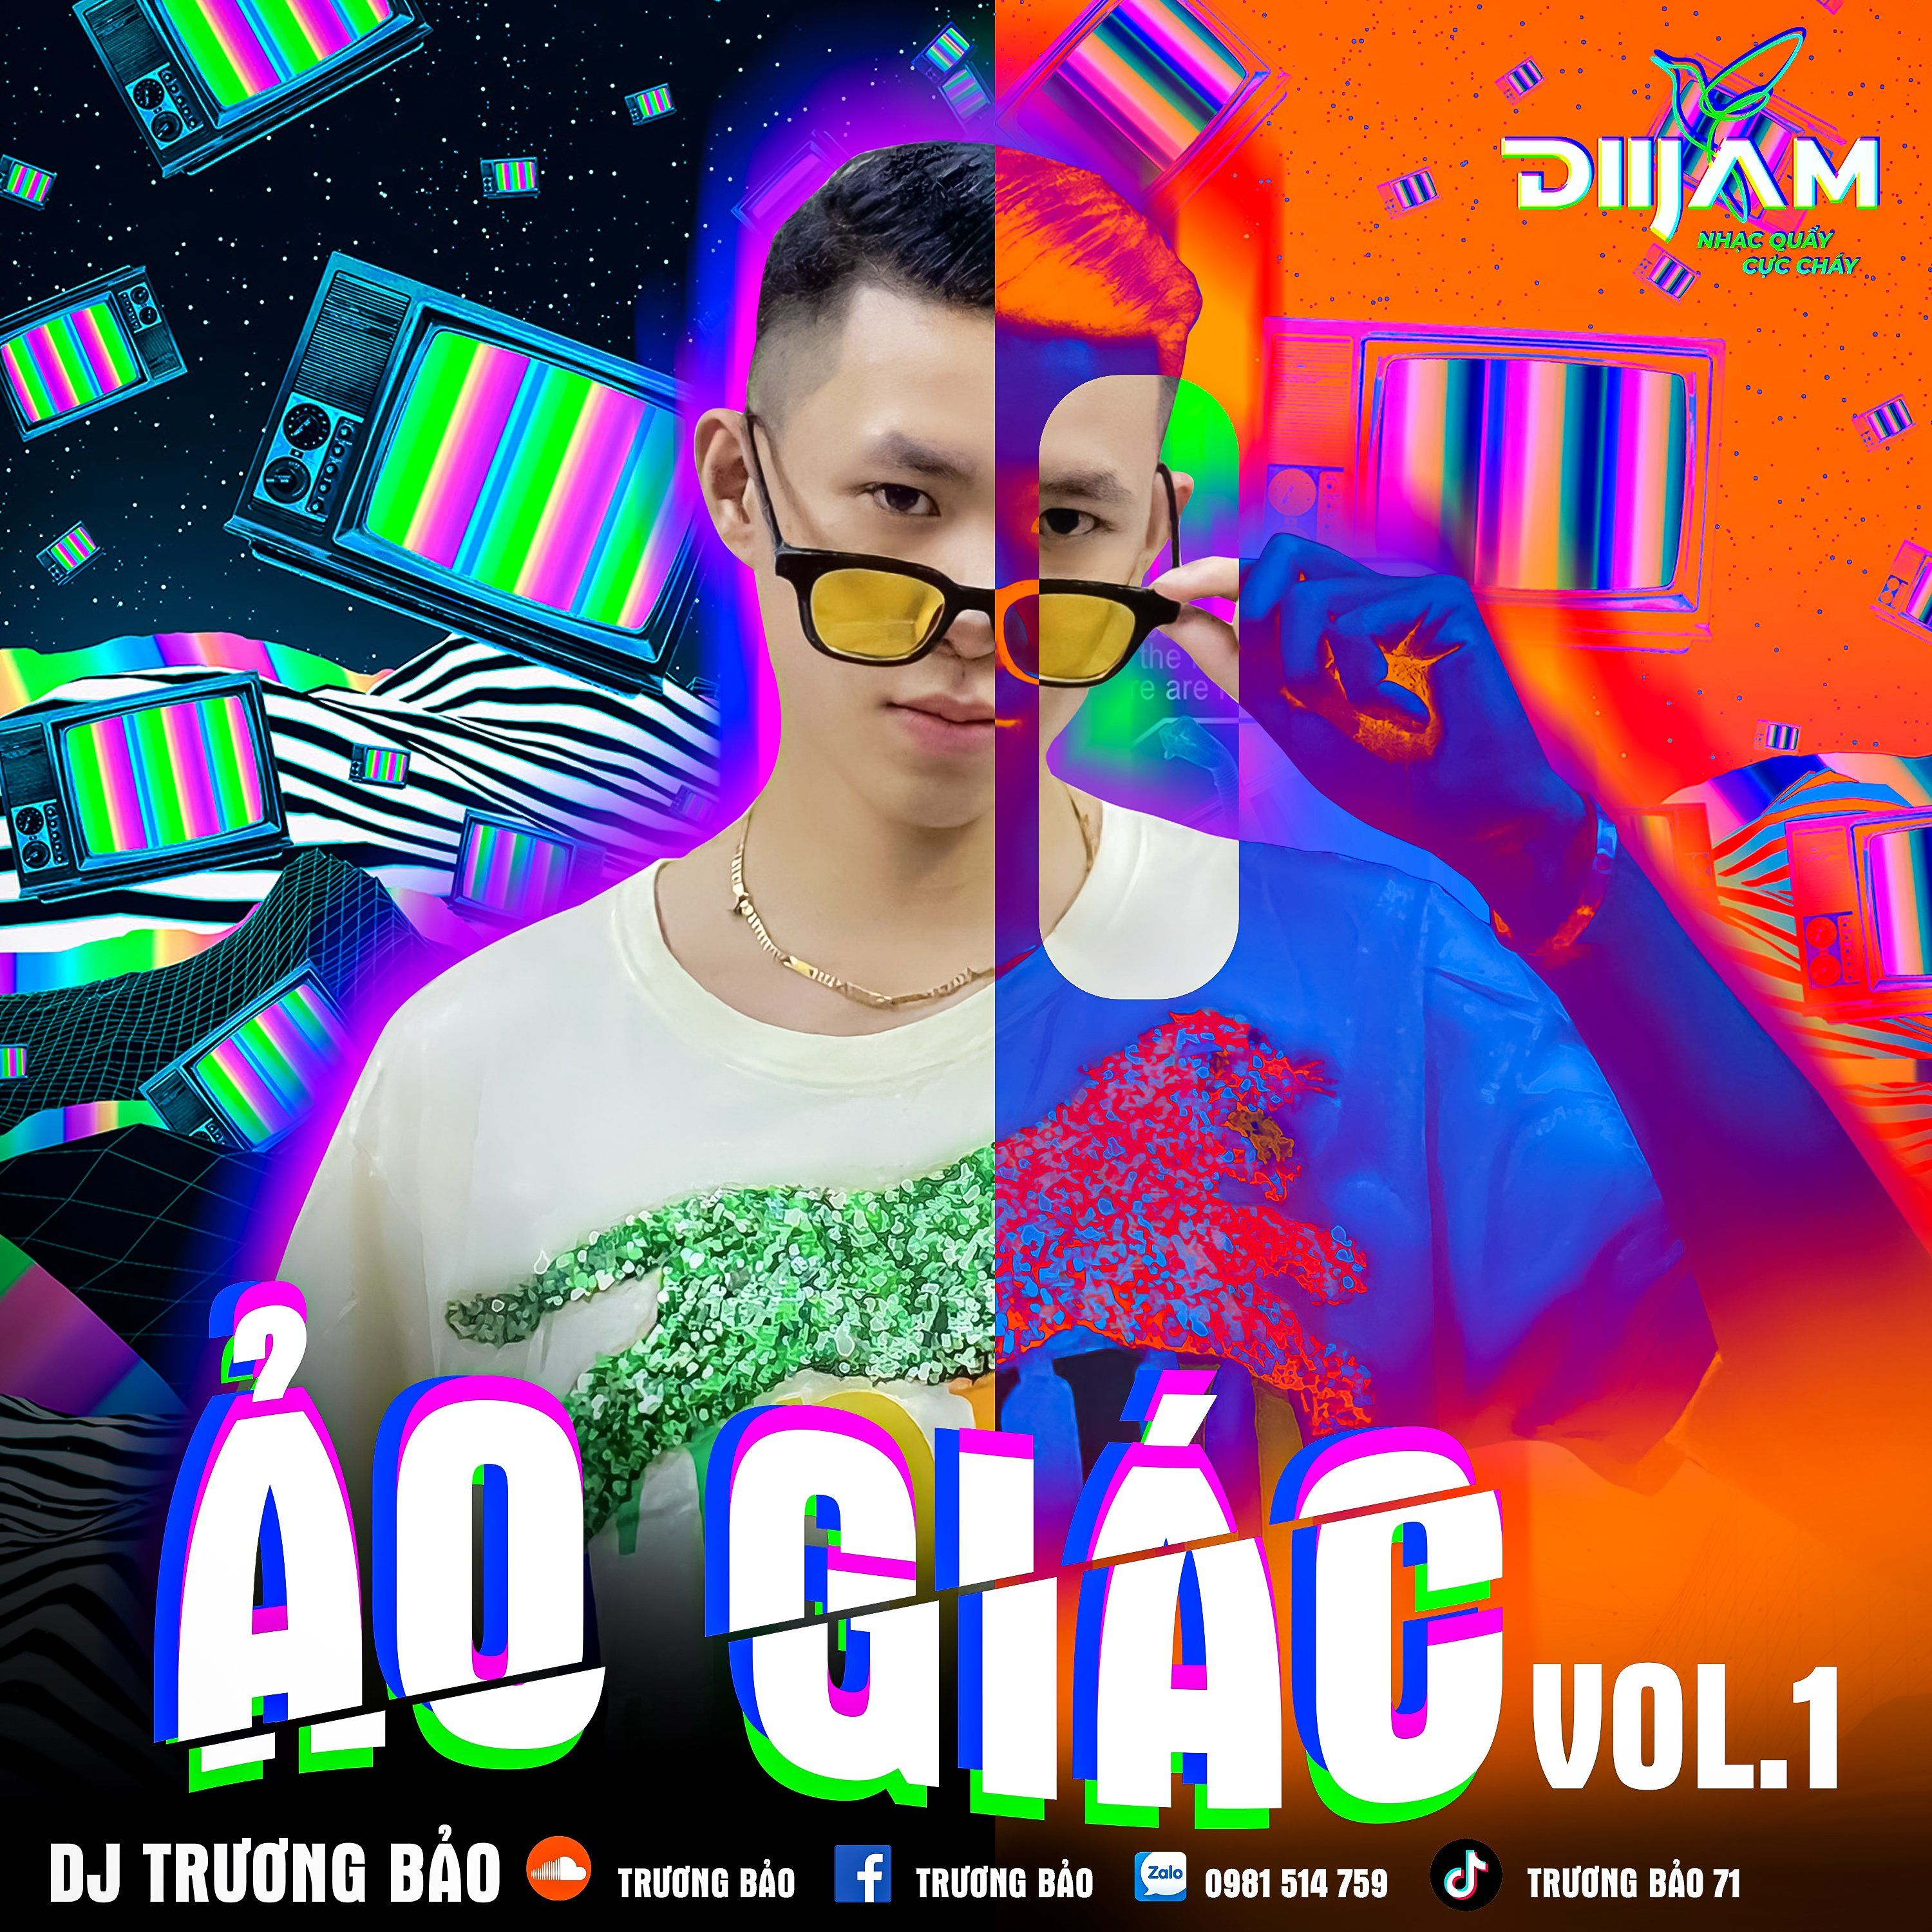 Изтегли Ảo Giác Vol 1 - DJ Trương Bảo (Nonstop Diijam)